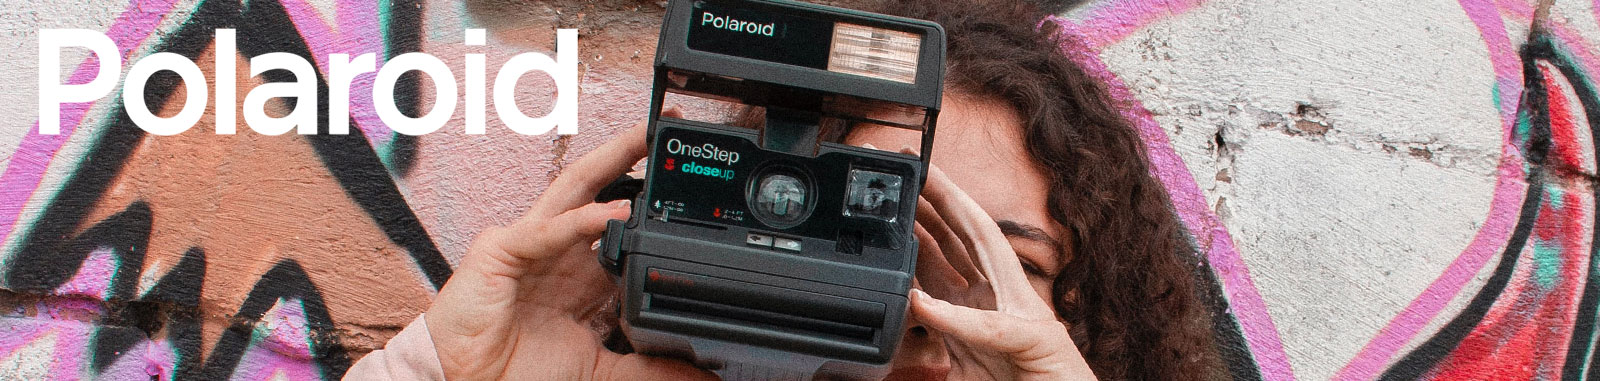 PolaroidPageHero